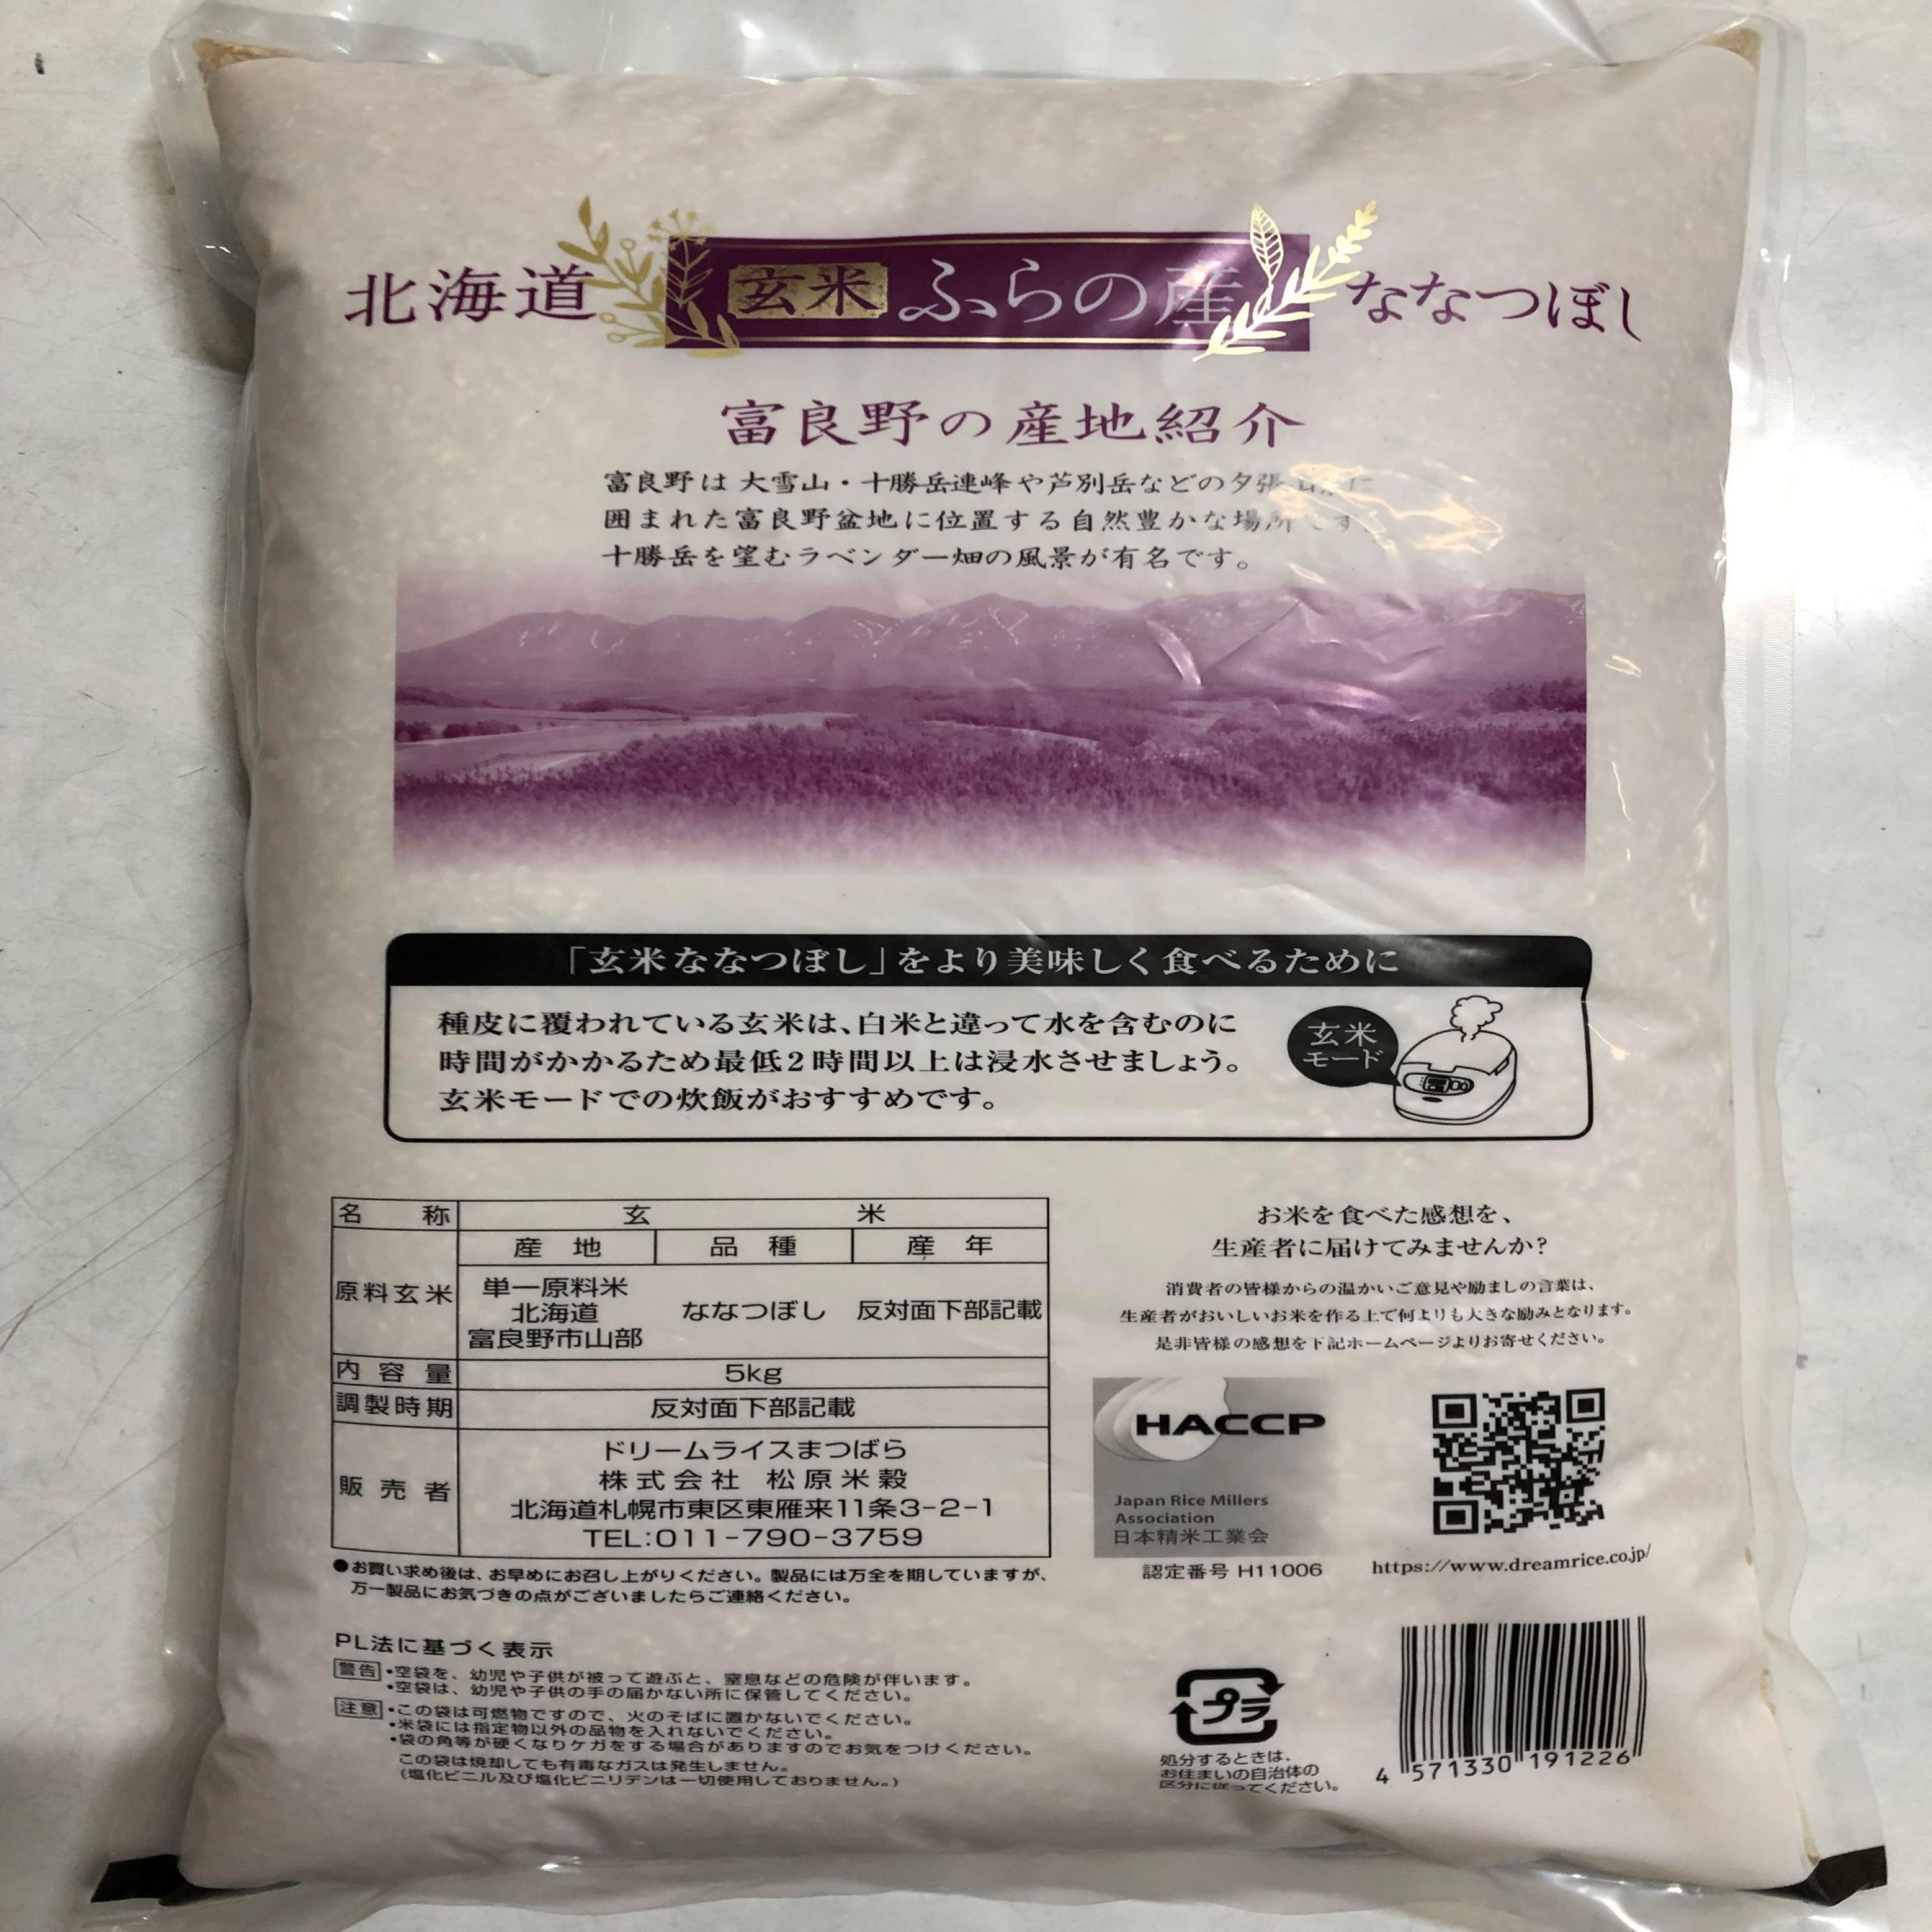 Costco　5kg　富良野産ななつぼし玄米　Japan